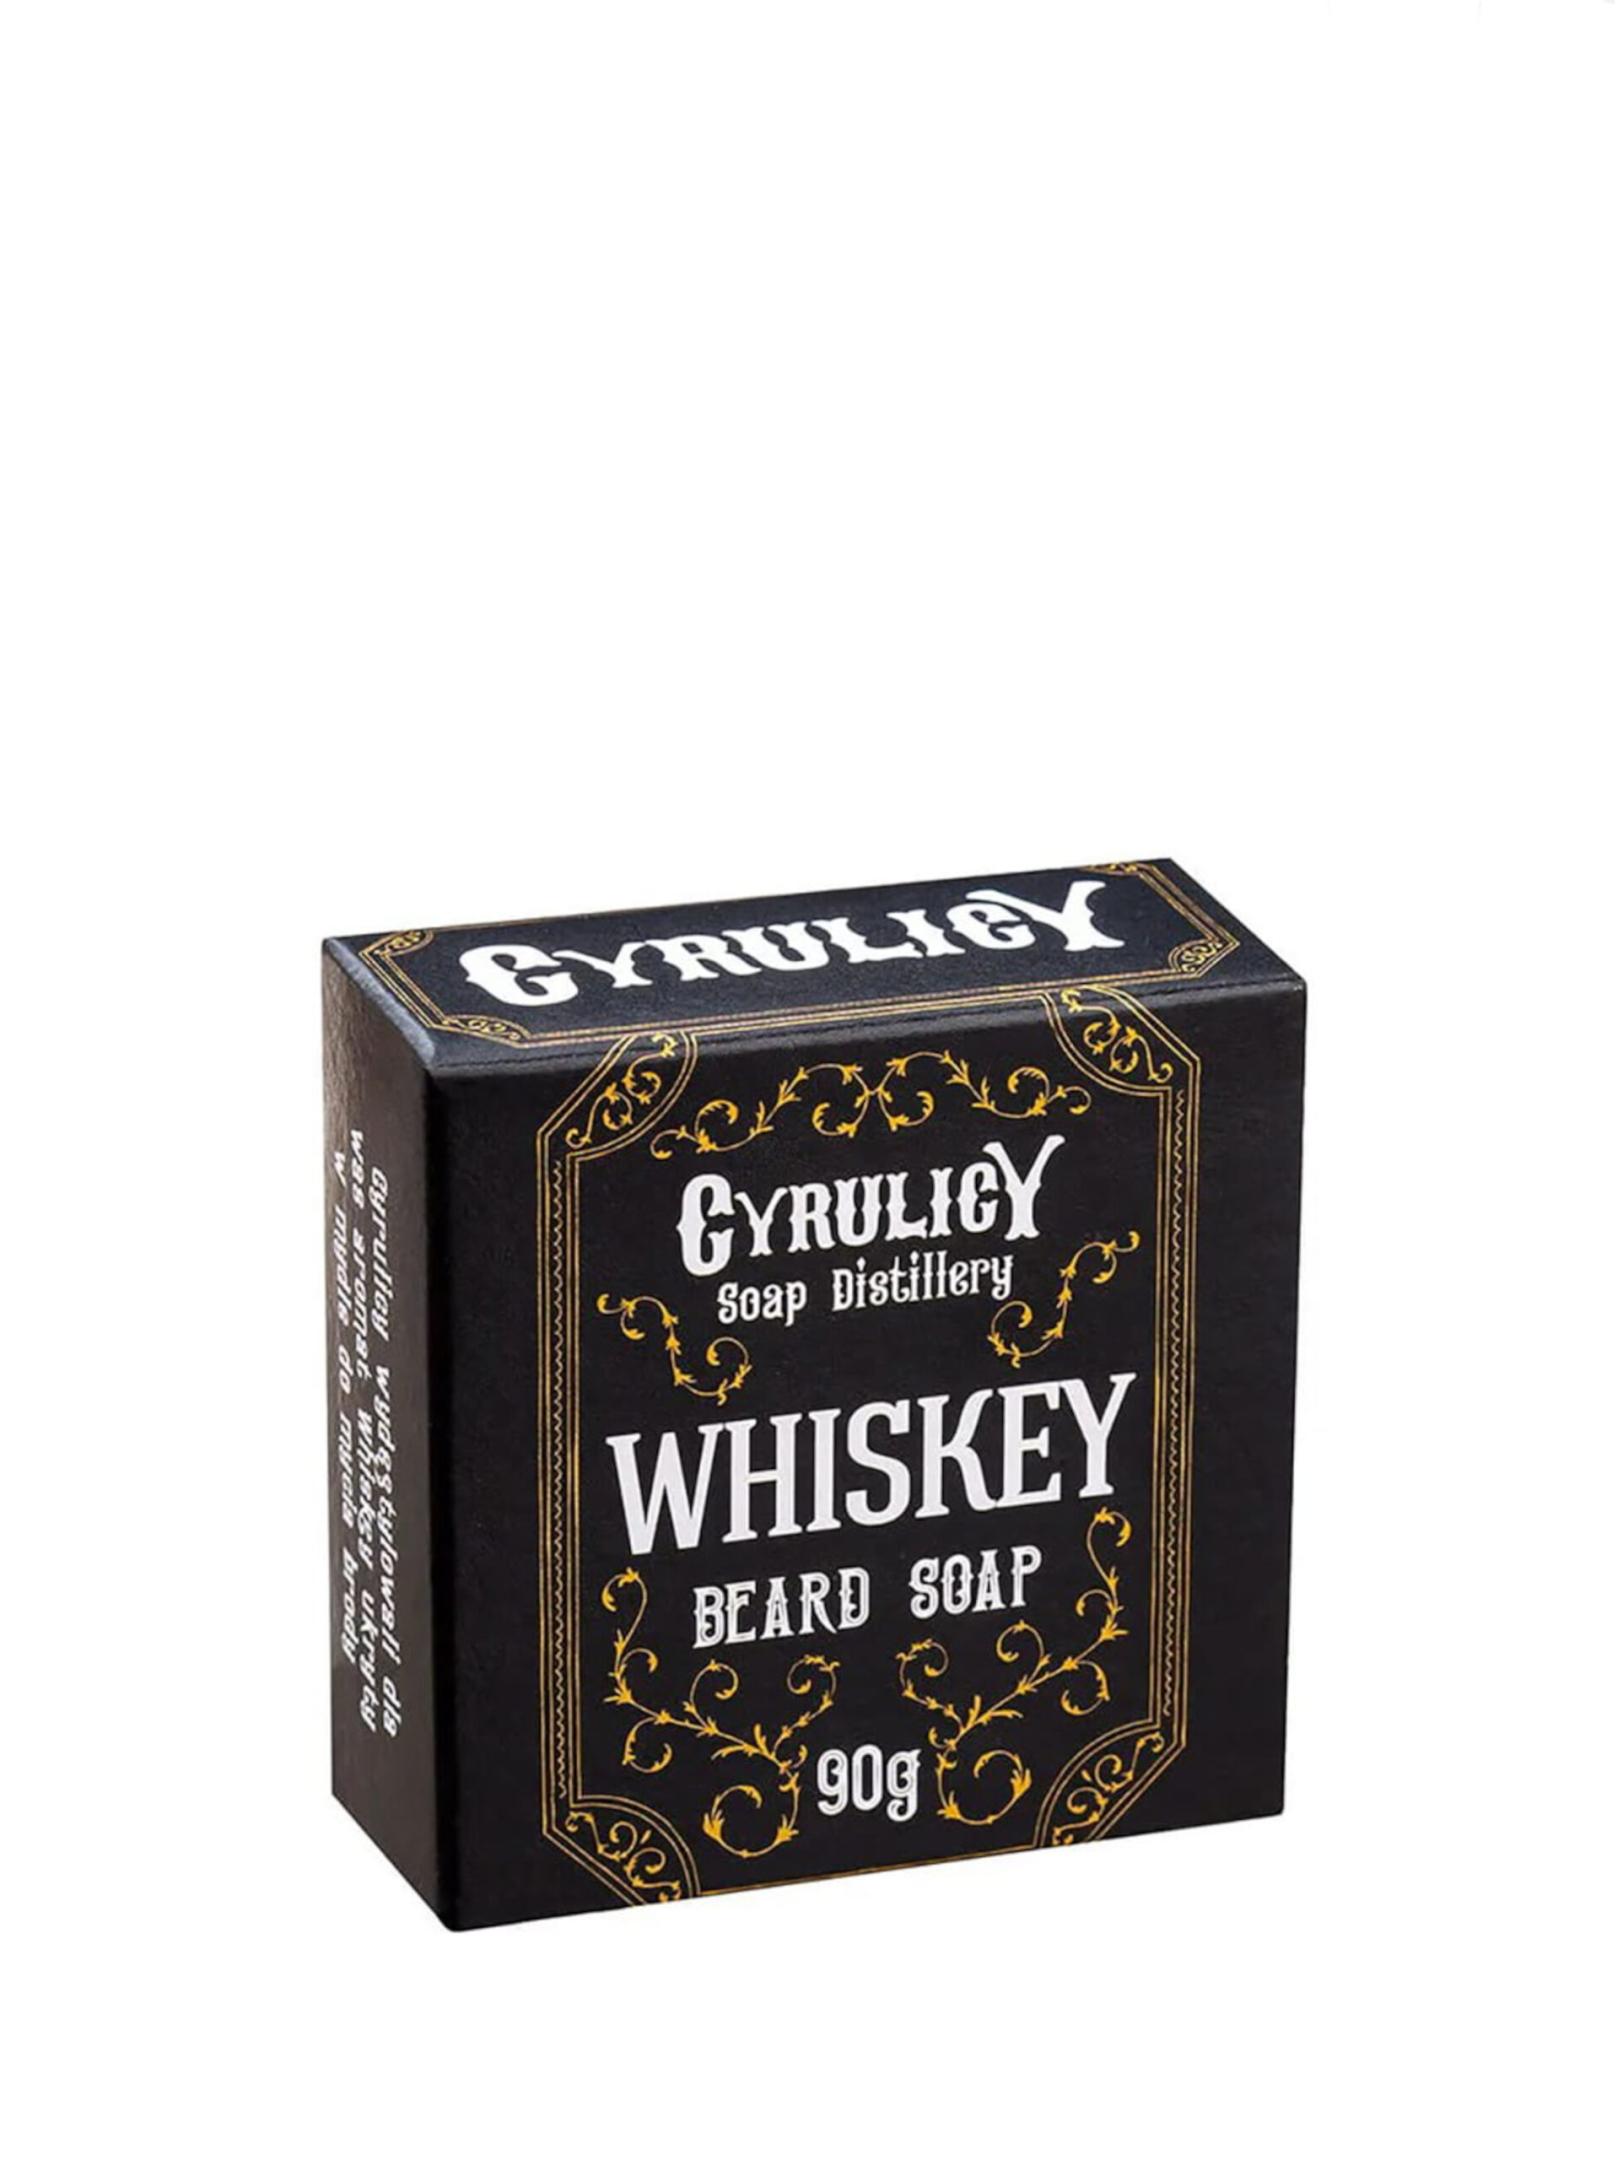 Cyrulicy mydlo do brody Whiskey 90g